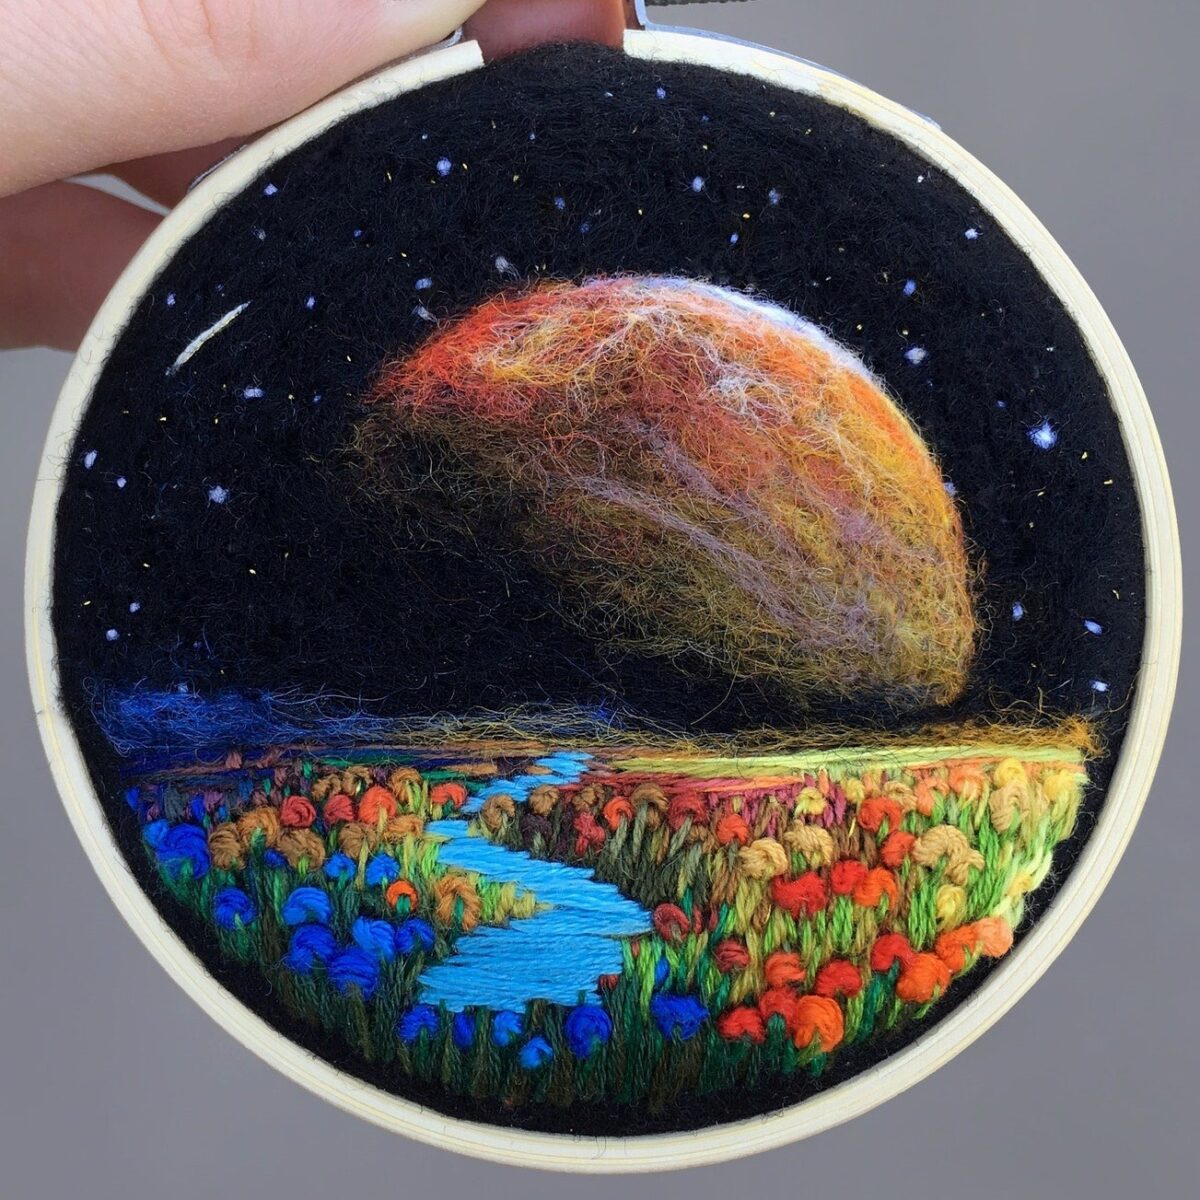 Lush Night Sky Landscape Needle Felted And Embroidered Art Hoops By Yuliya Krishchik 6